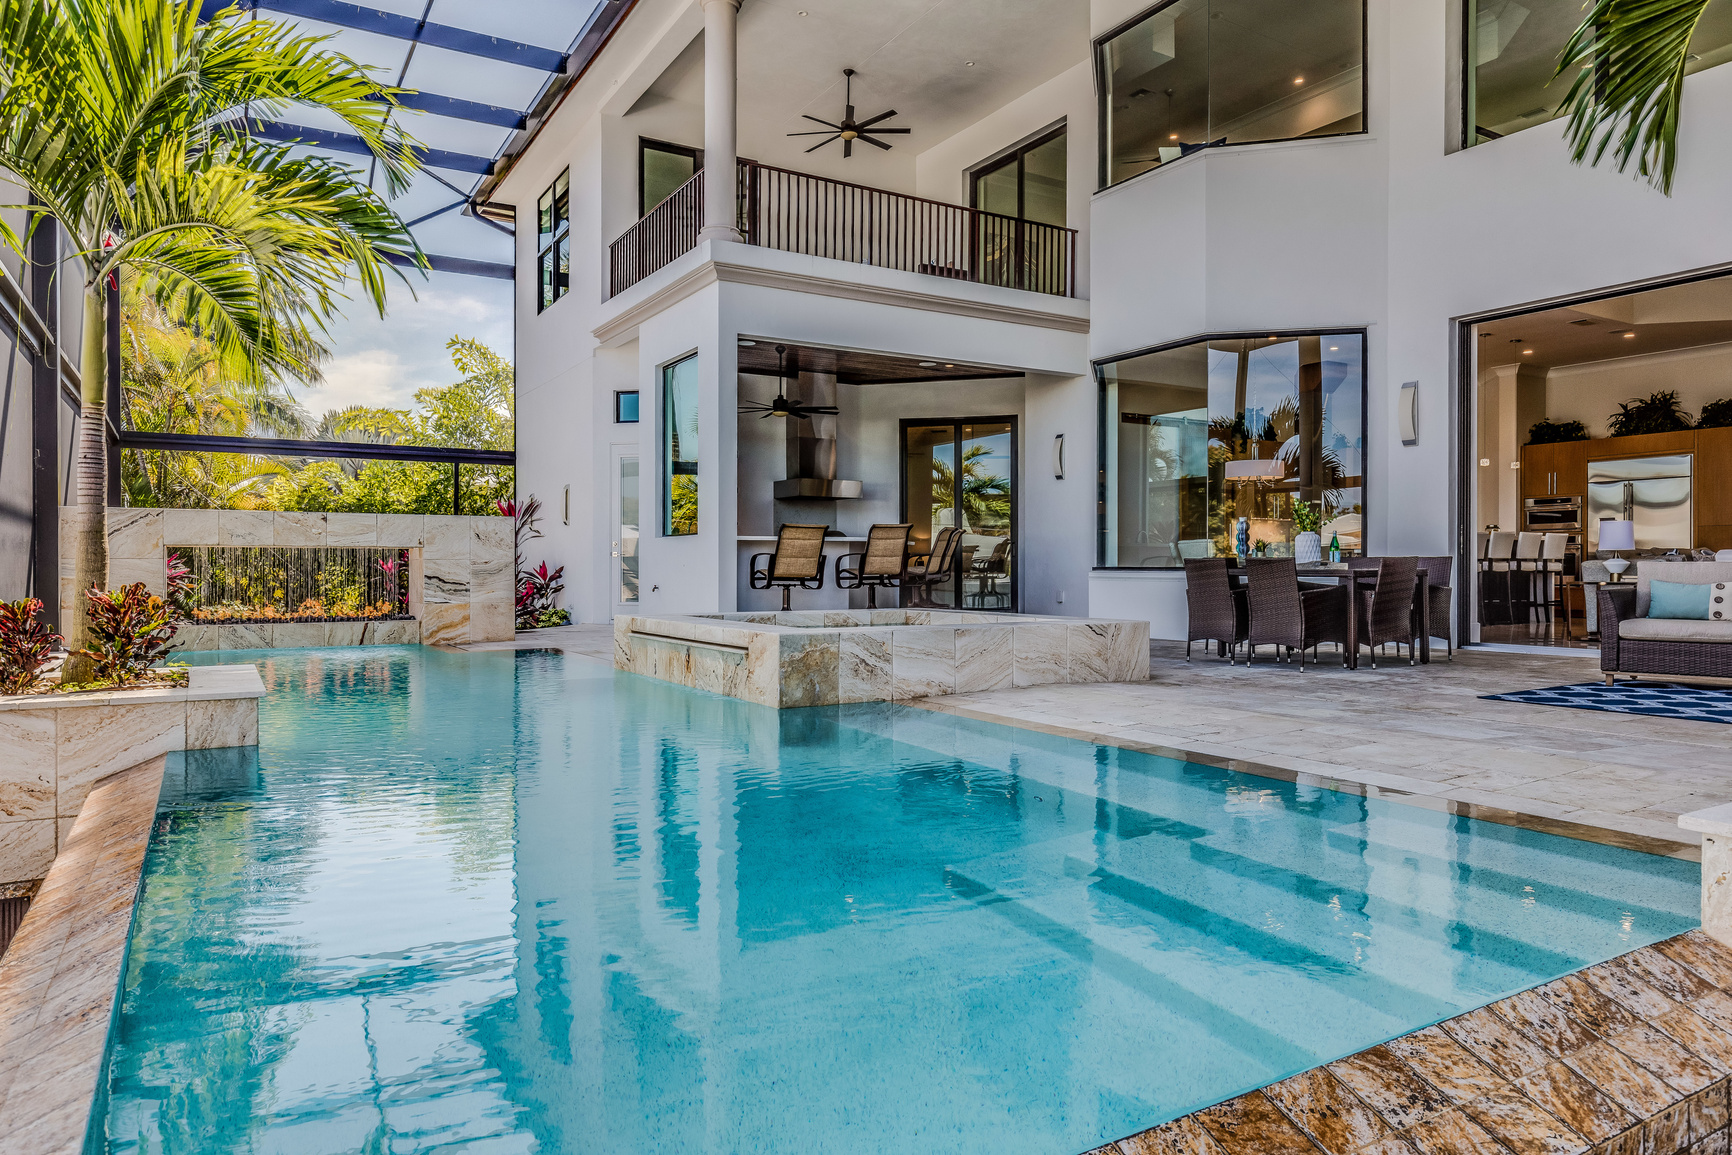 Pool area of Florida mansion